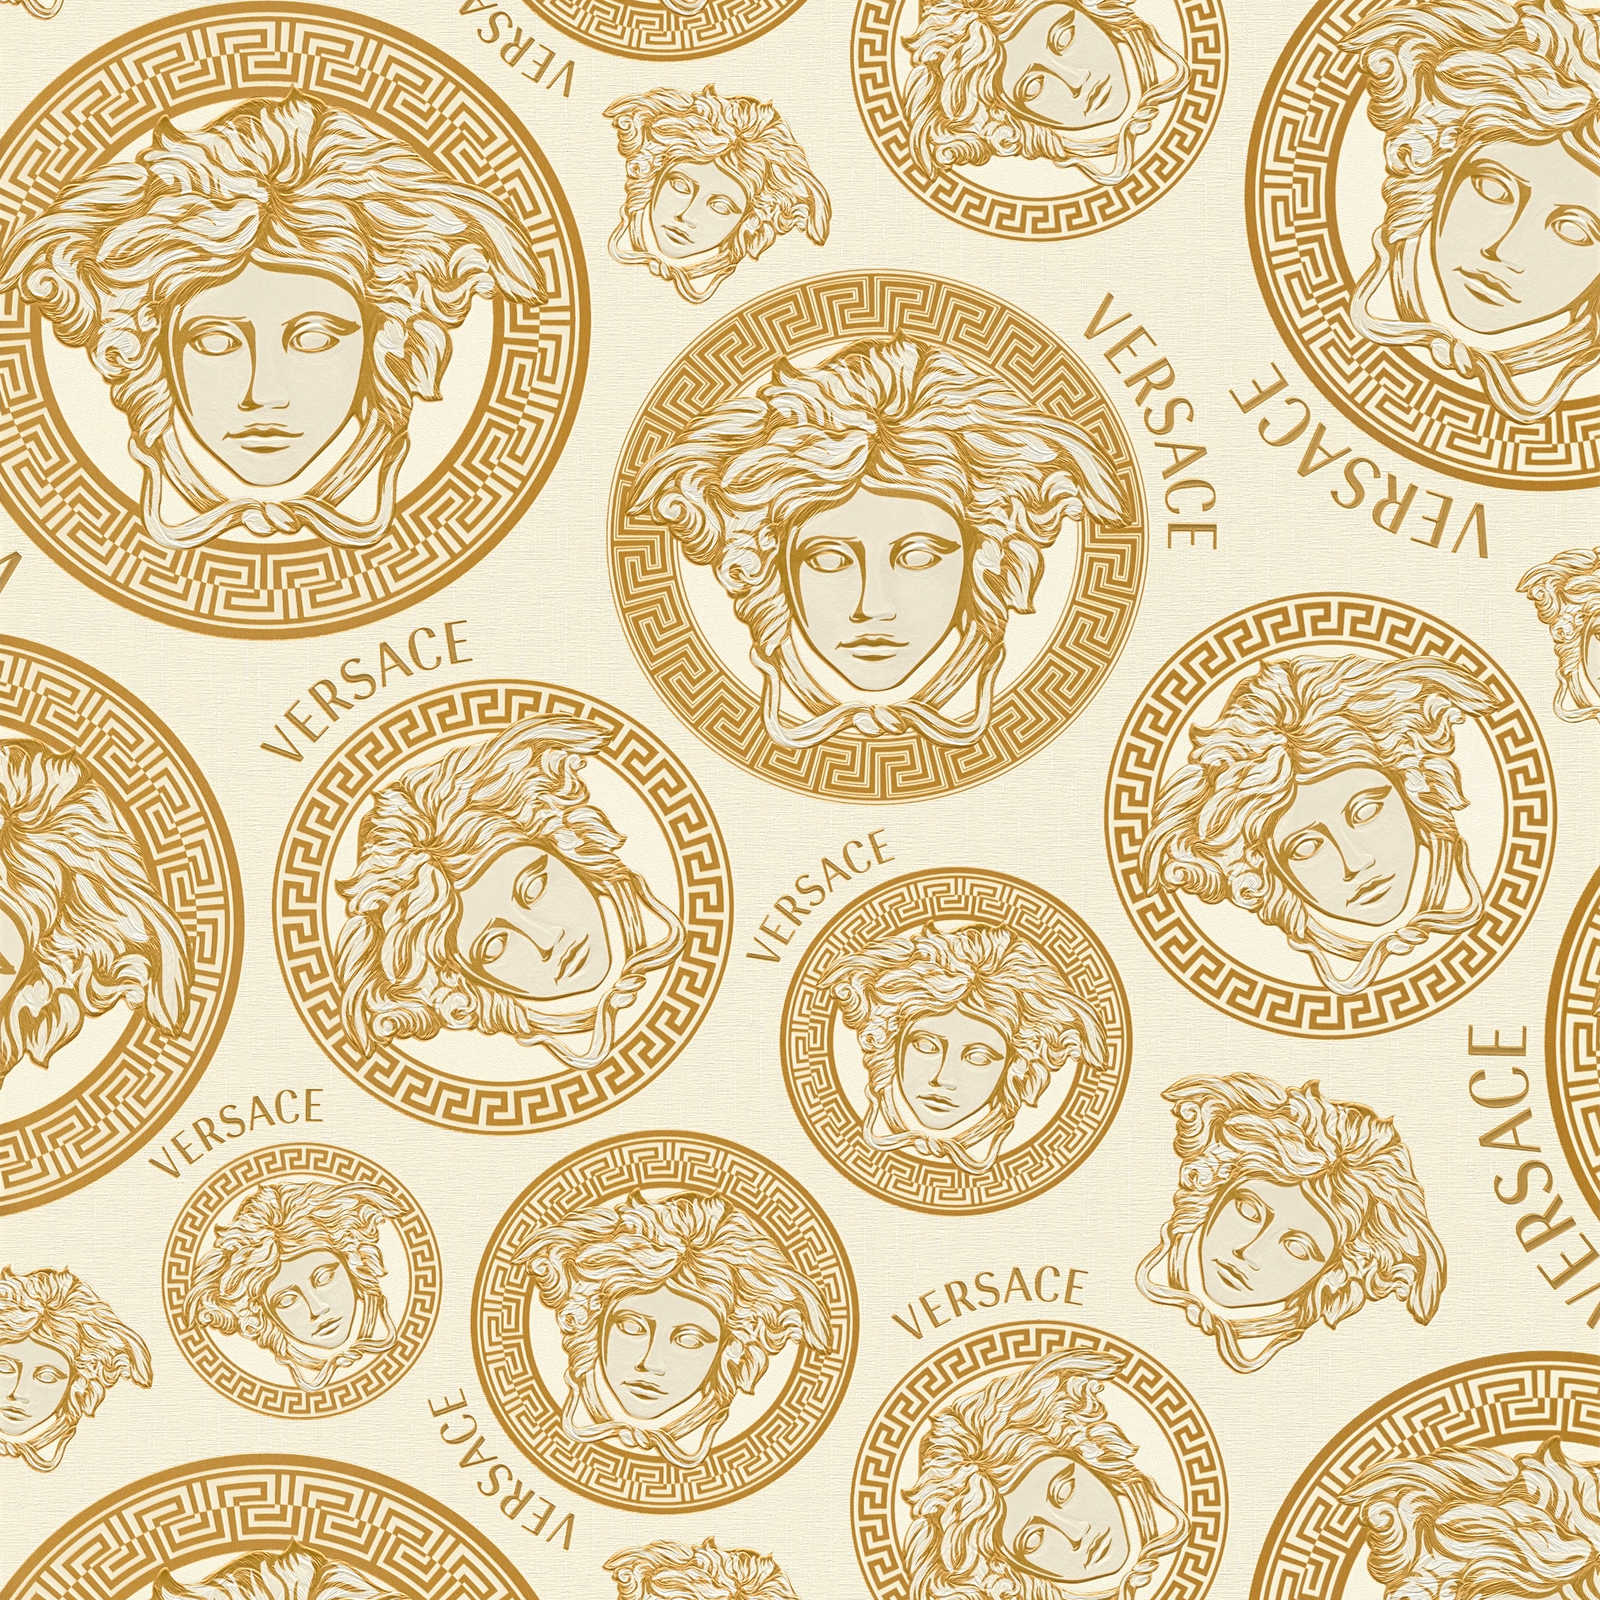 VERSACE Tapete Gold Design mit Medusa Emblem – Creme
